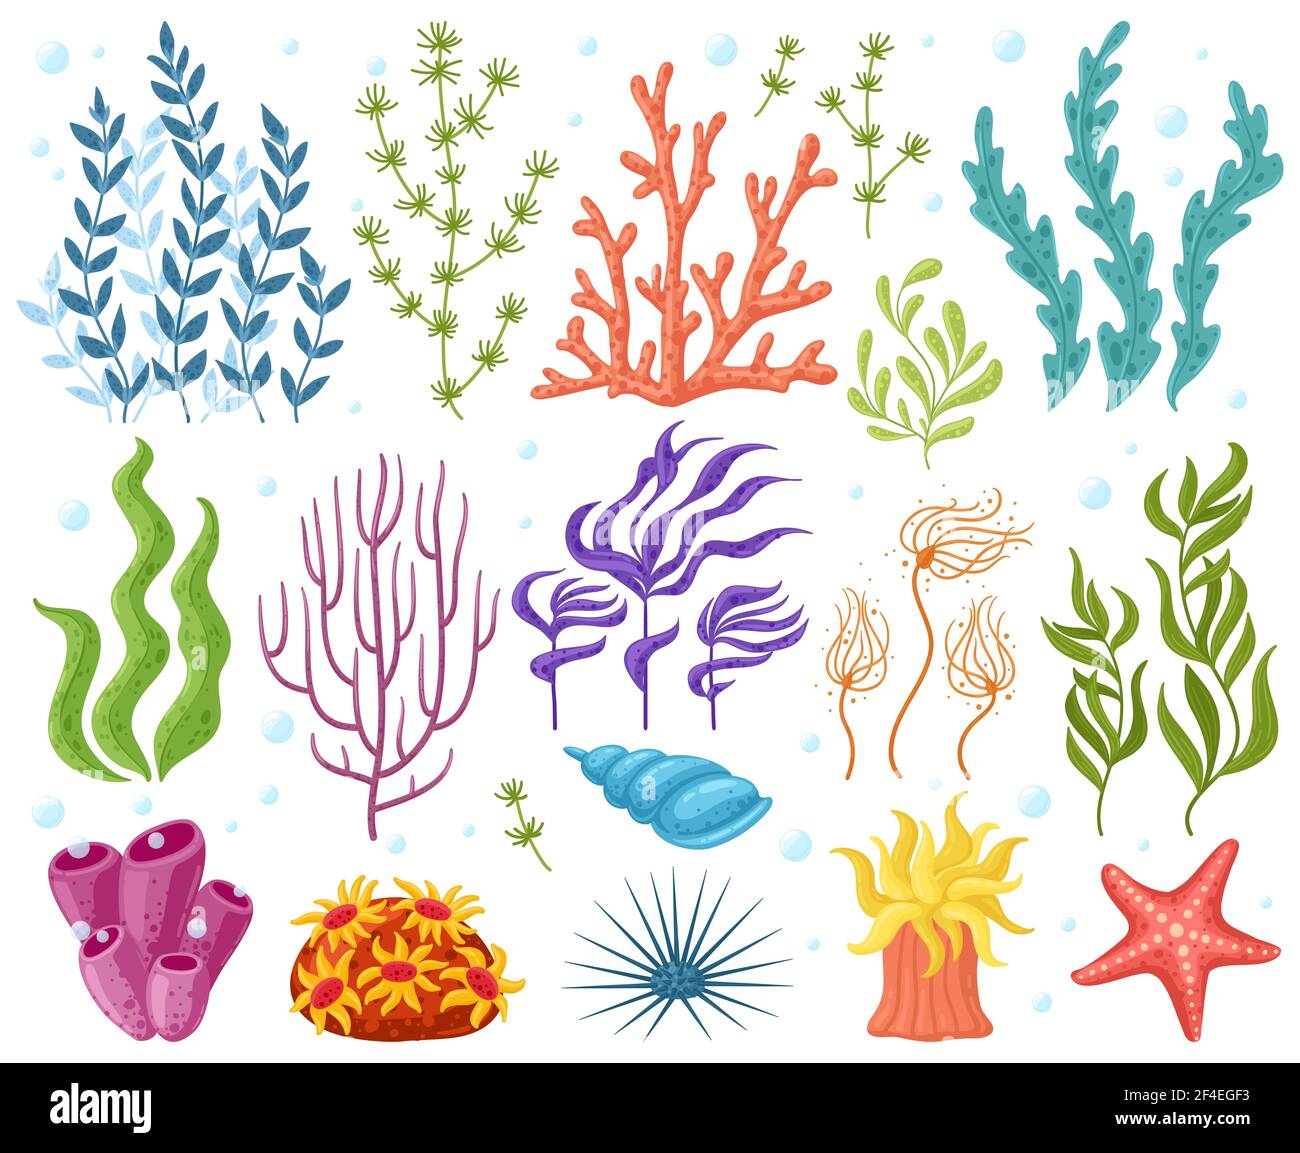 Dibujos animados plantas oceánicas. Anémonas, corales y algas marinas, algas  marinas, plantas de acuario. Juego de iconos de ilustración de vector de  flora de arrecife submarino. Marina o mar Imagen Vector de